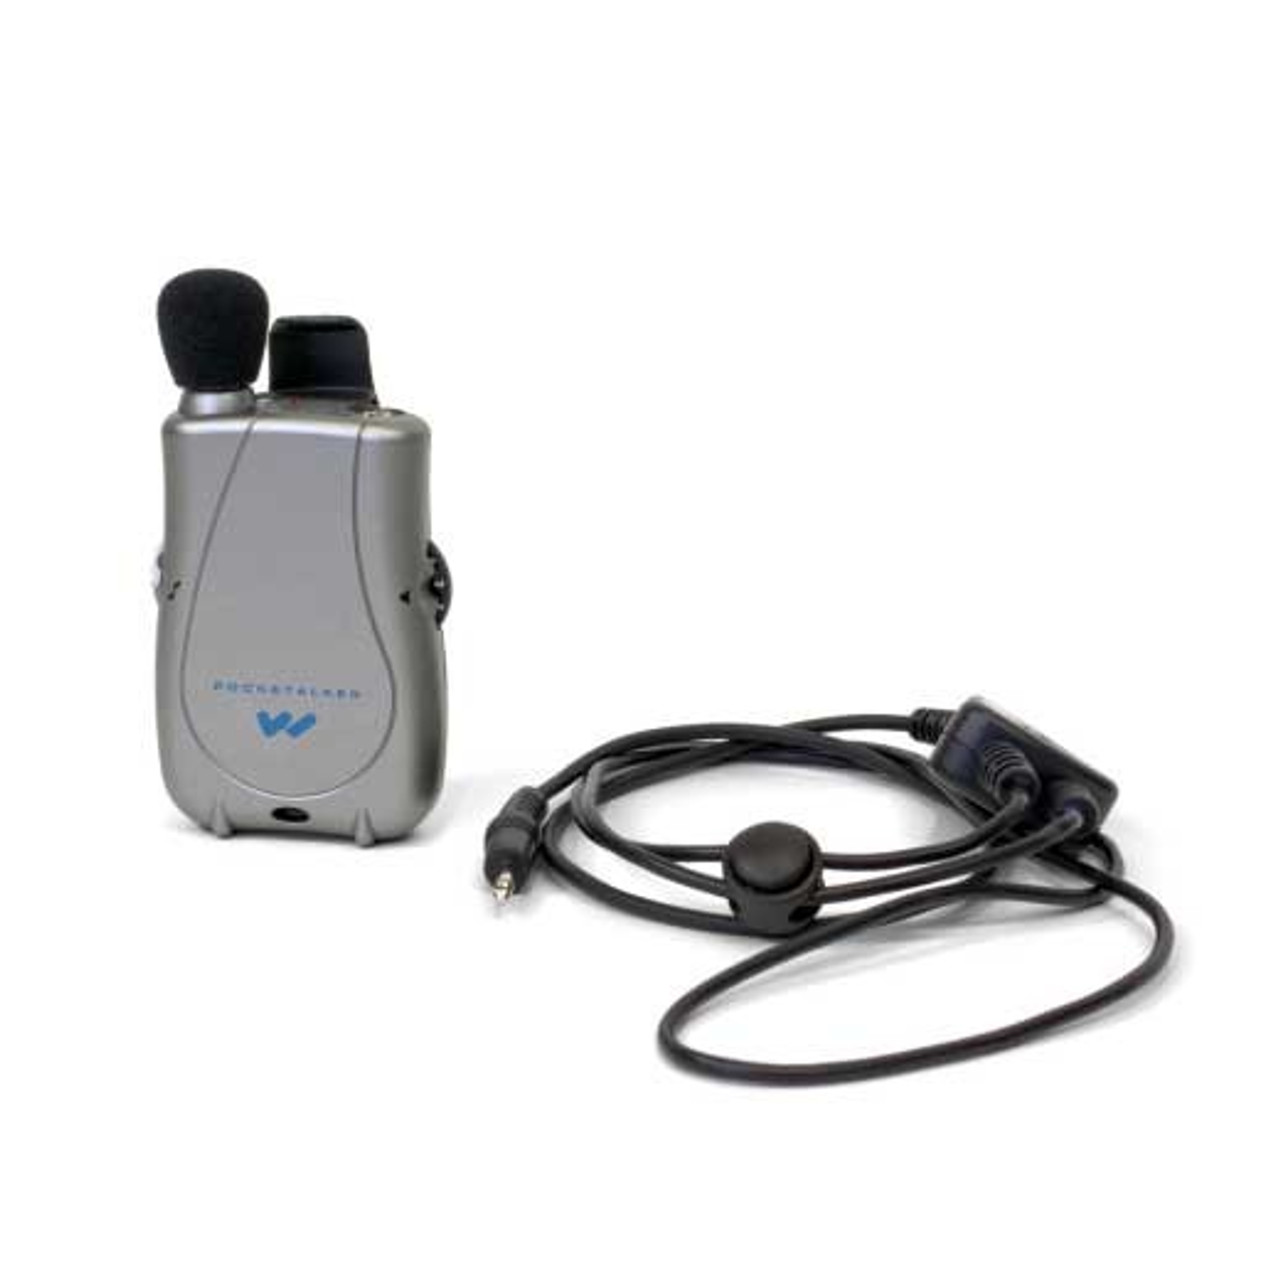 Williams Sound Pocketalker Ultra Personal Sound Amplifier with Neckloop N01  - Vaughn Engineering